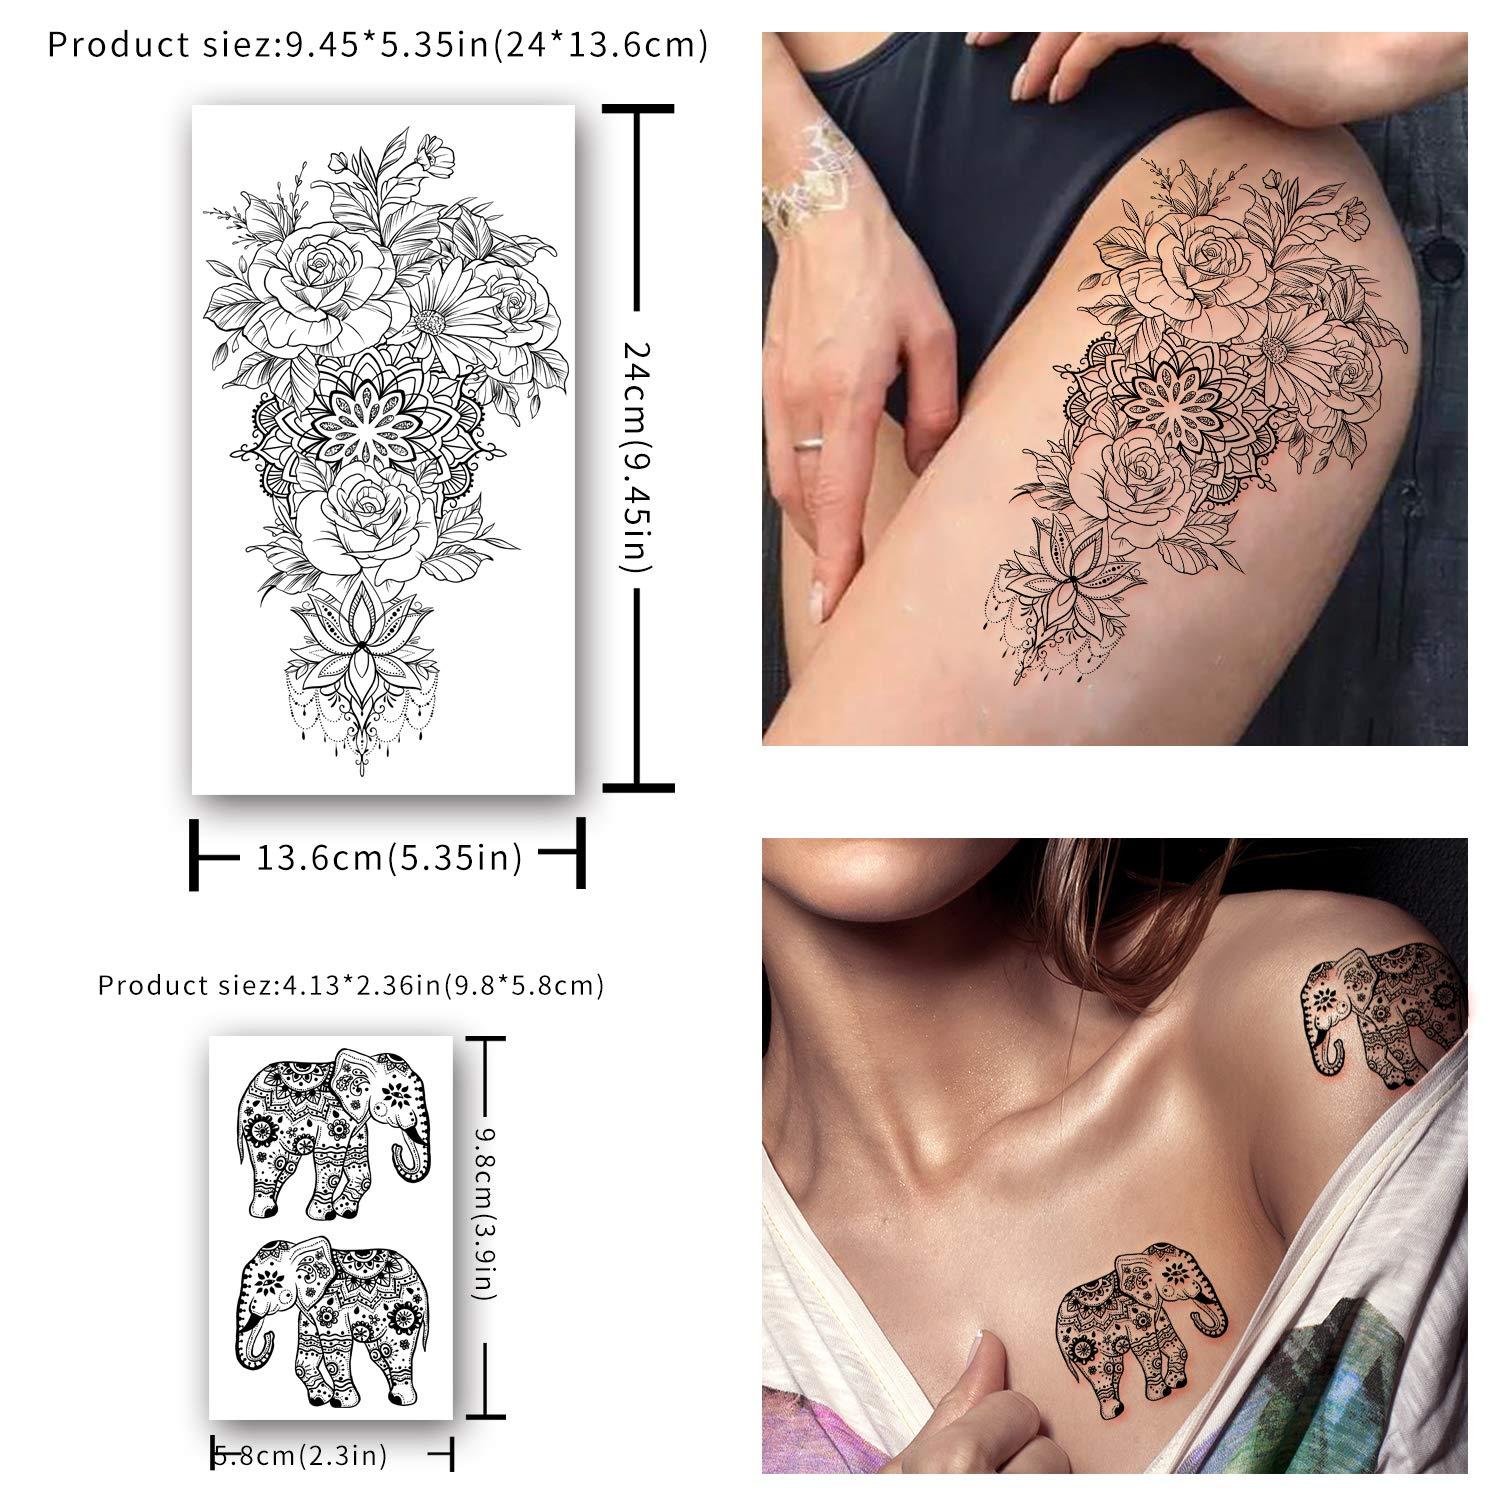 Removable Temporary Tattoo English Word Body Art Tattoos Sticker Waterproof  S-sl | eBay